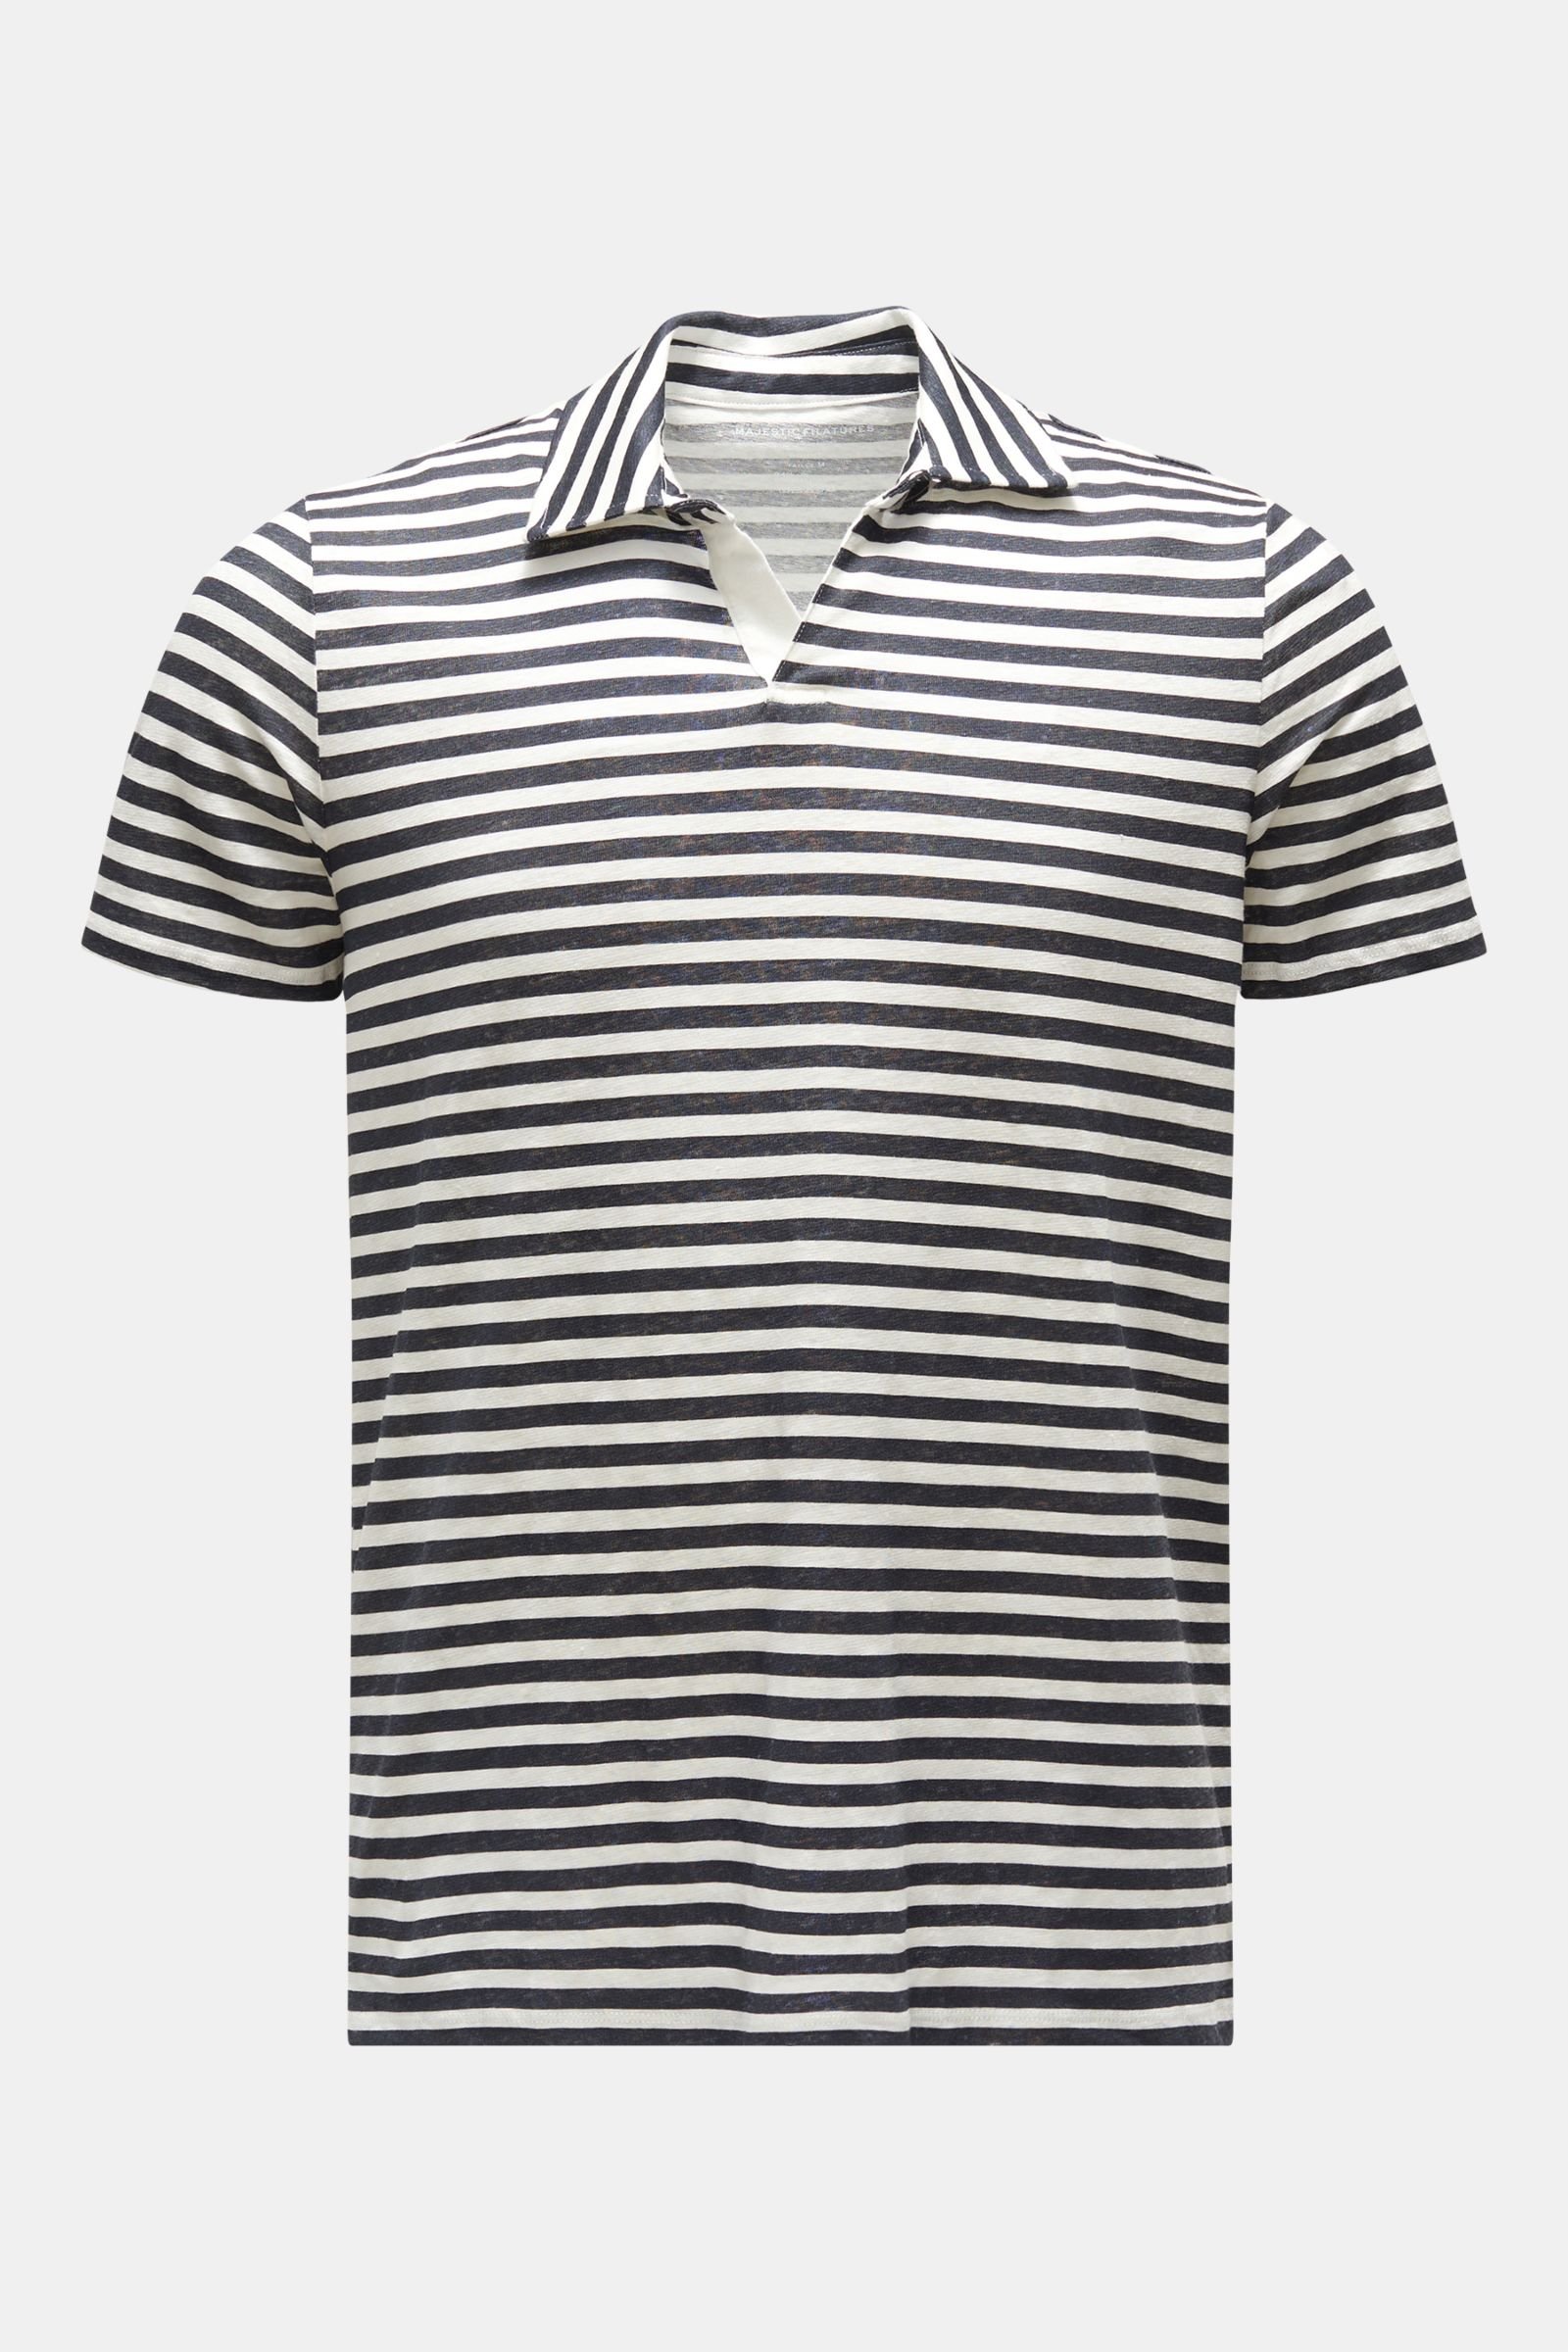 Linen polo shirt dark navy/white striped